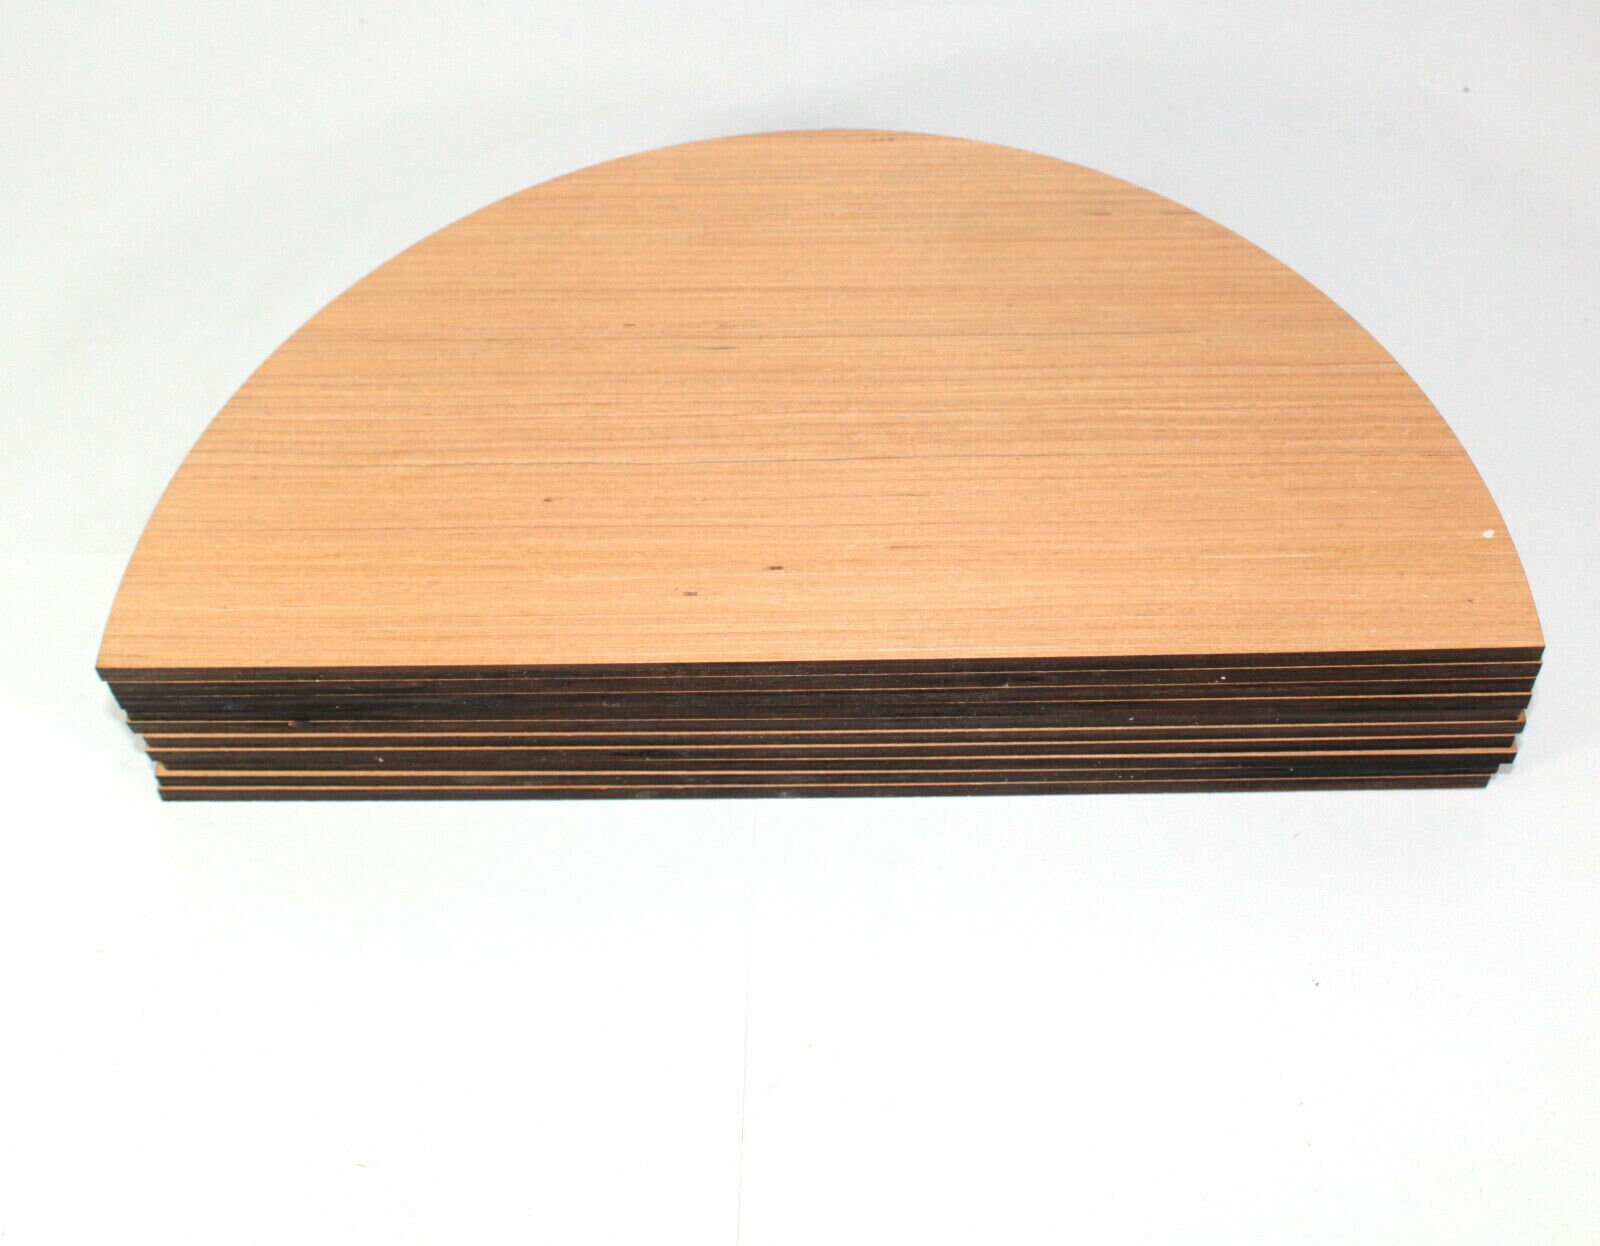 60x Quarter Circle Wooden Craft Shapes Wood DIY Decoration Disc Plaque